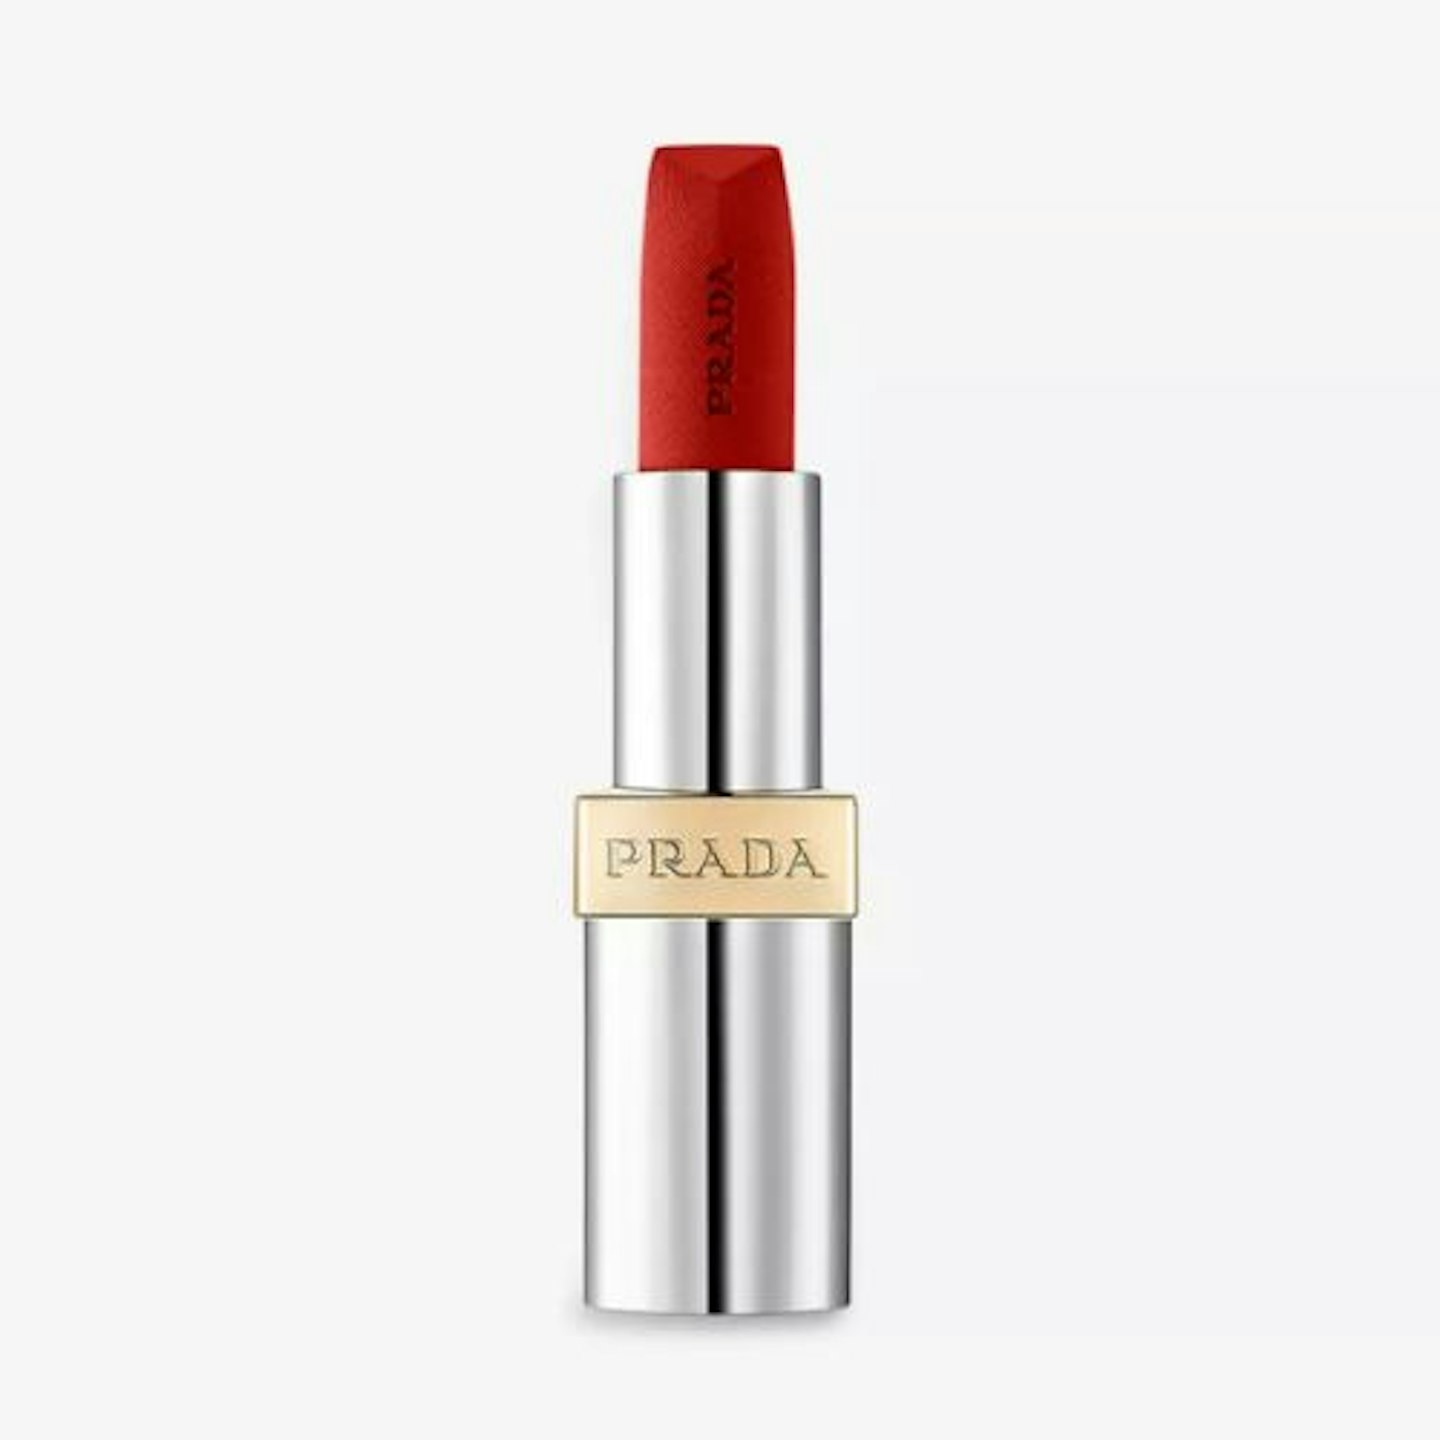 PRADA Hyper Matte monochrome refillable lipstick